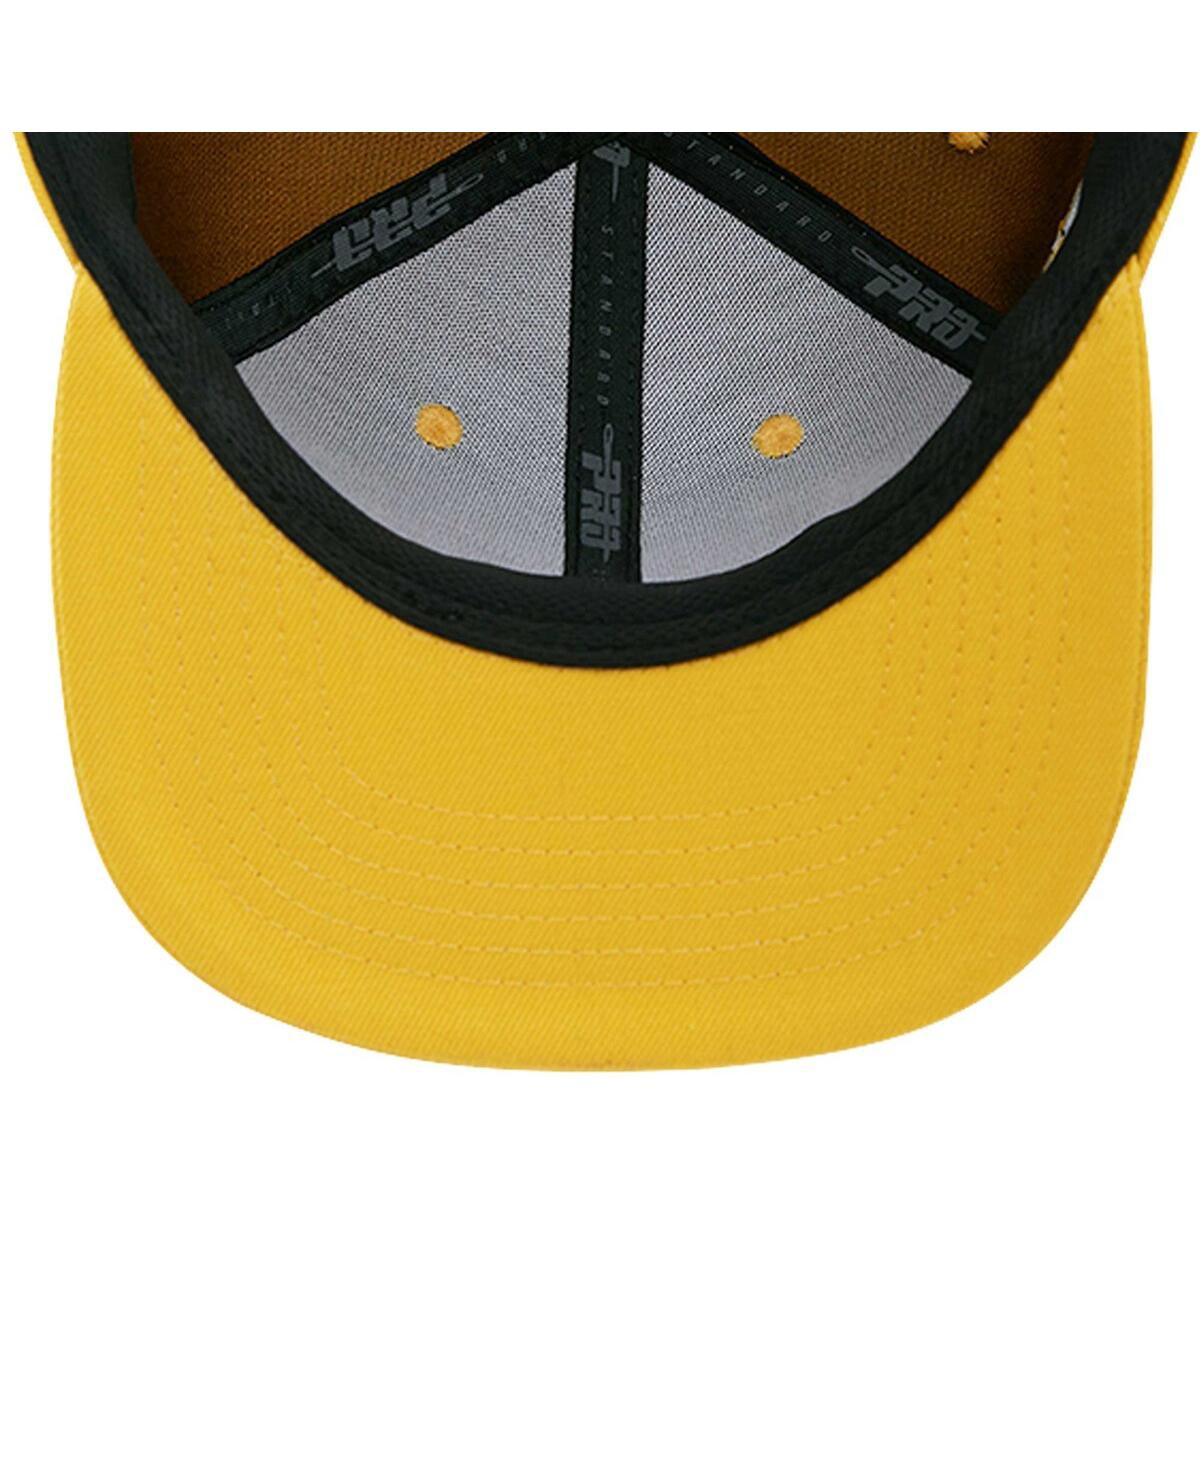 Shop Pro Standard Men's  Gold Prairie View A&m Panthers Evergreen Mascot Snapback Hat